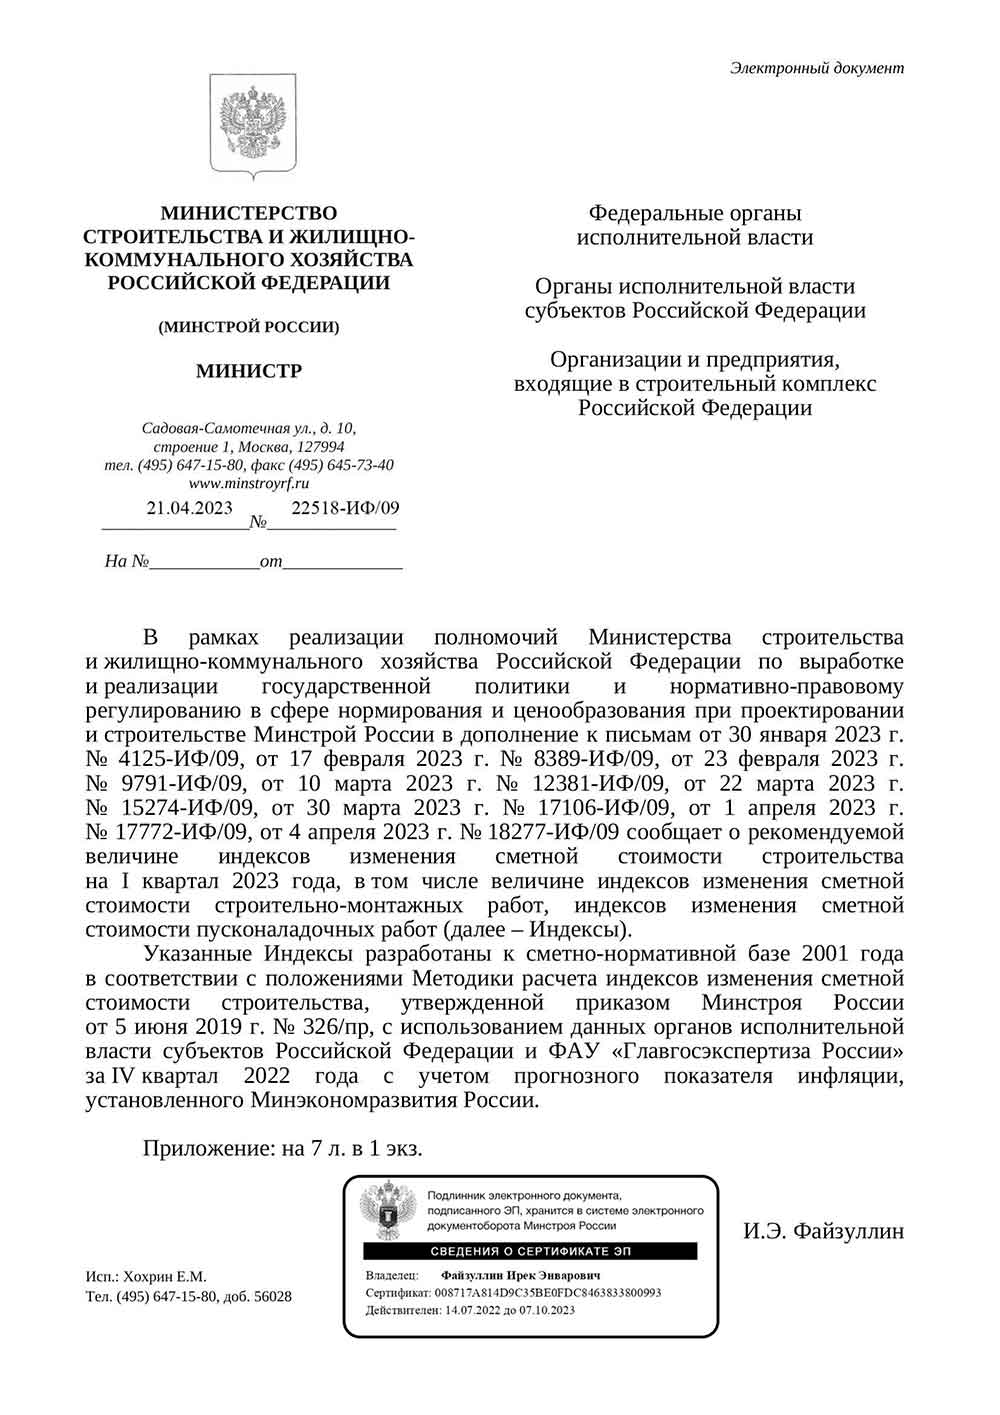 Письмо Минстроя РФ №22518-ИФ/09 от 21.04.2023 г.